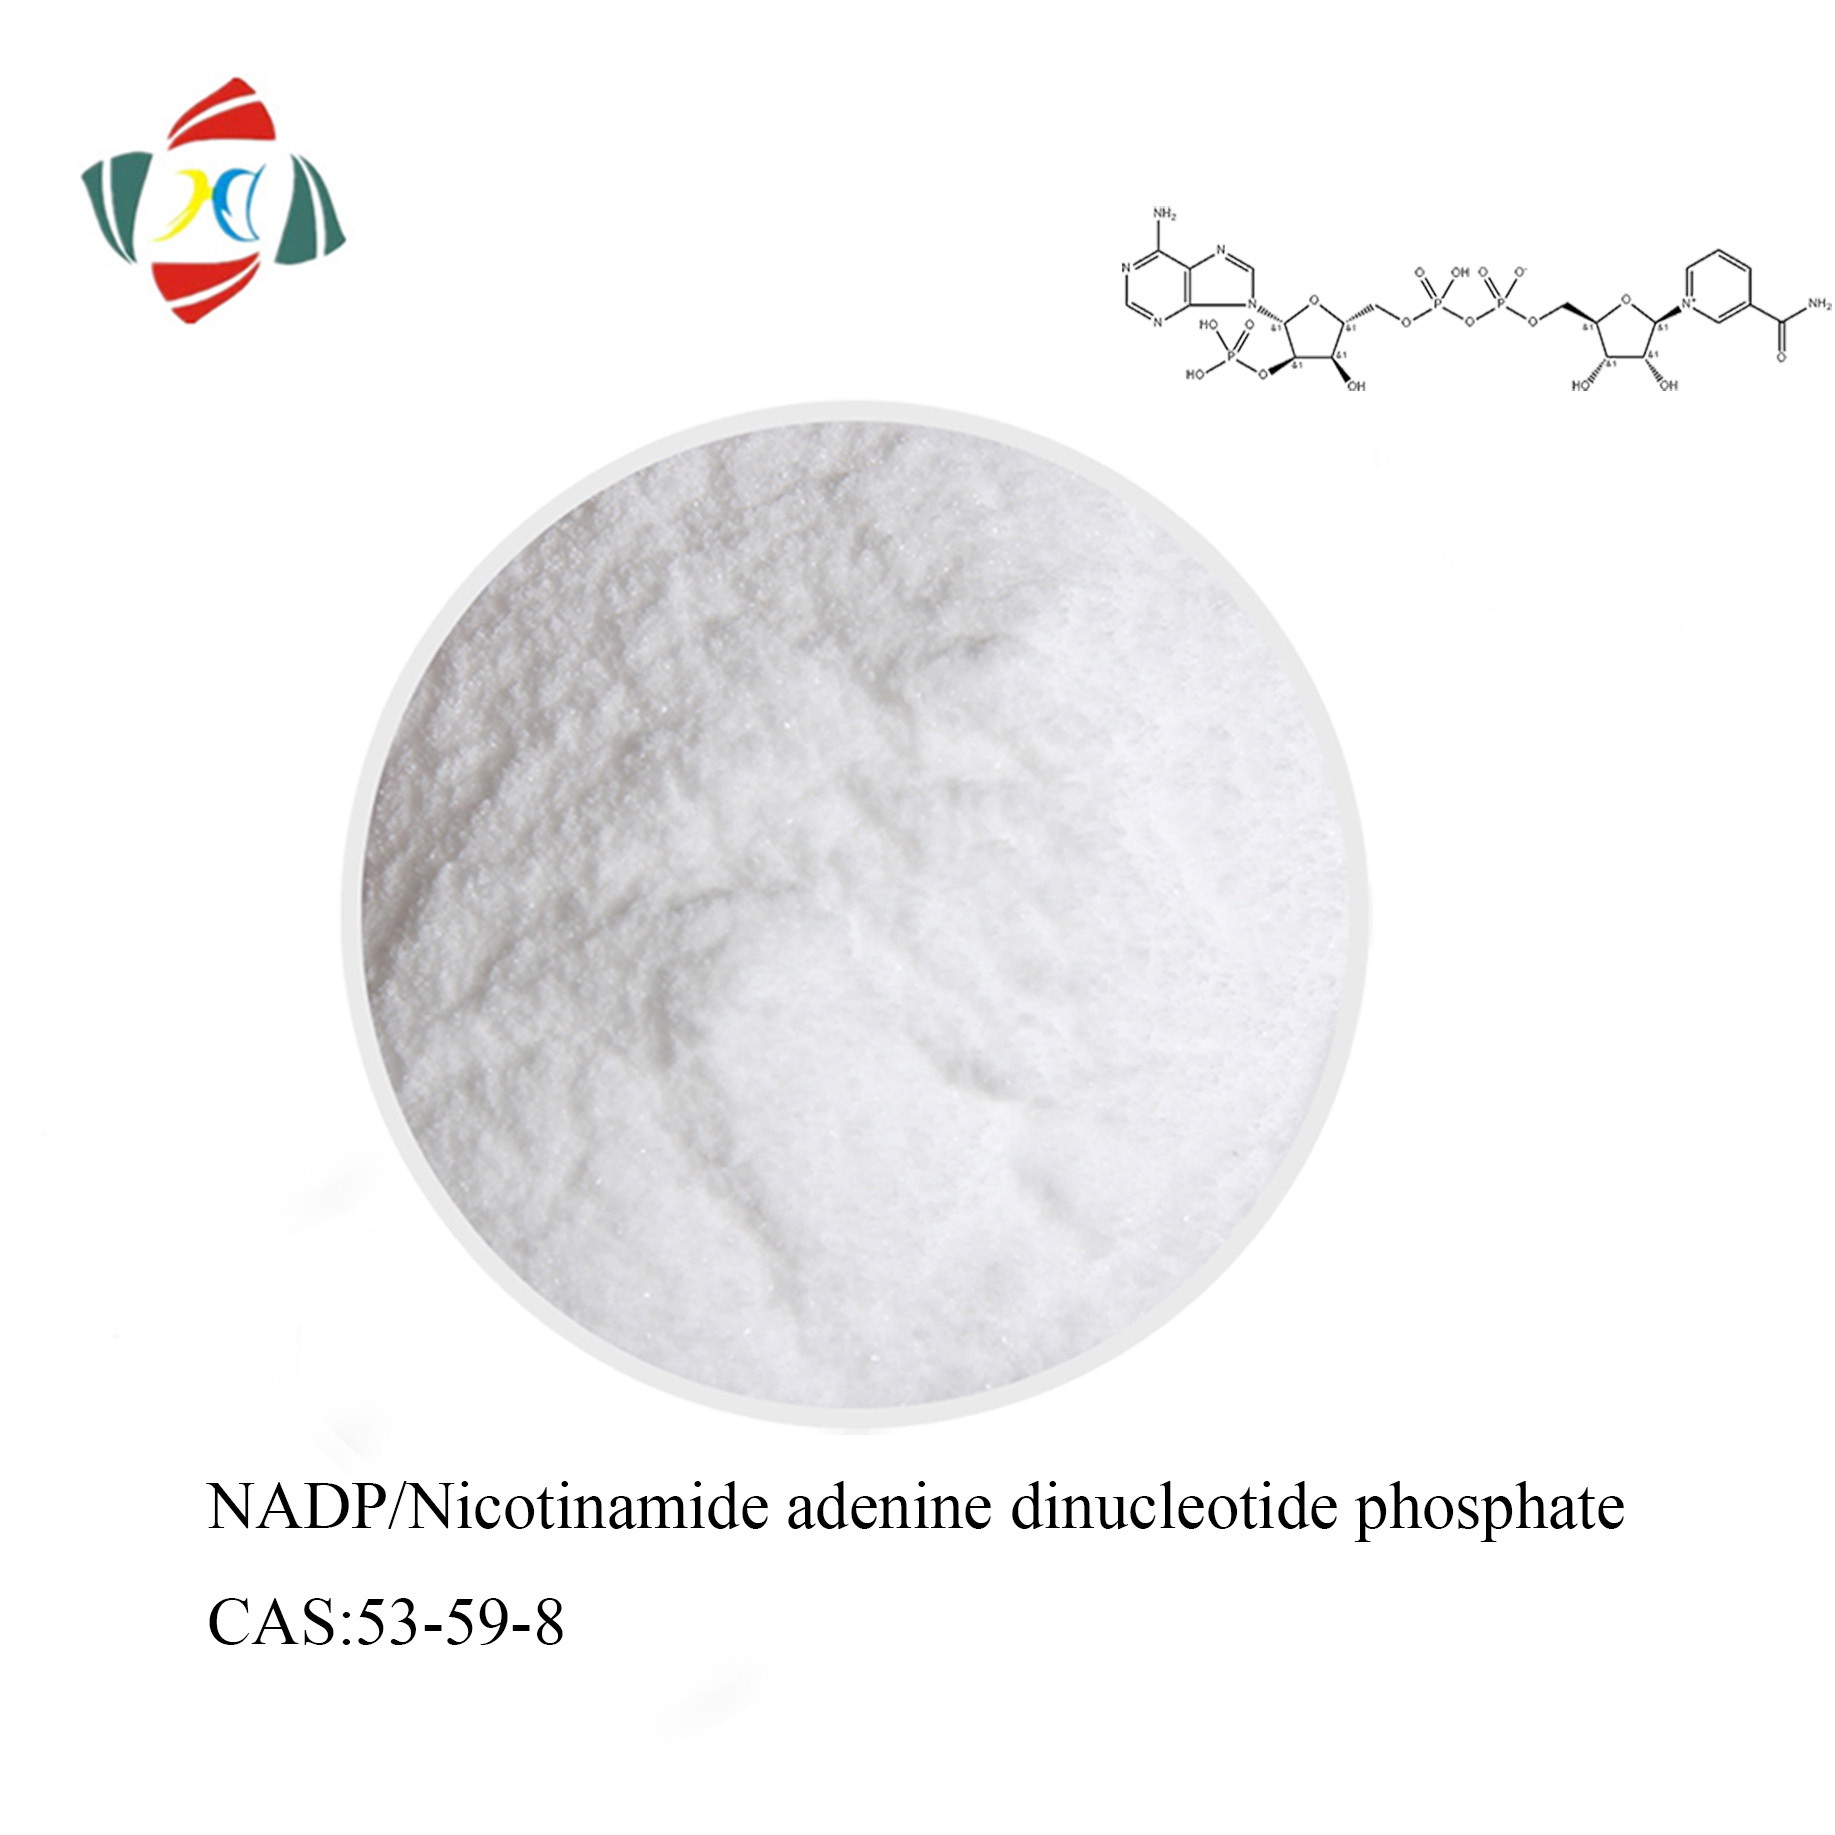 Acquista Beta-nicotinamide adenina dinucleotide fosfato /NADP CAS 53-59-8,Beta-nicotinamide adenina dinucleotide fosfato /NADP CAS 53-59-8 prezzi,Beta-nicotinamide adenina dinucleotide fosfato /NADP CAS 53-59-8 marche,Beta-nicotinamide adenina dinucleotide fosfato /NADP CAS 53-59-8 Produttori,Beta-nicotinamide adenina dinucleotide fosfato /NADP CAS 53-59-8 Citazioni,Beta-nicotinamide adenina dinucleotide fosfato /NADP CAS 53-59-8  l'azienda,